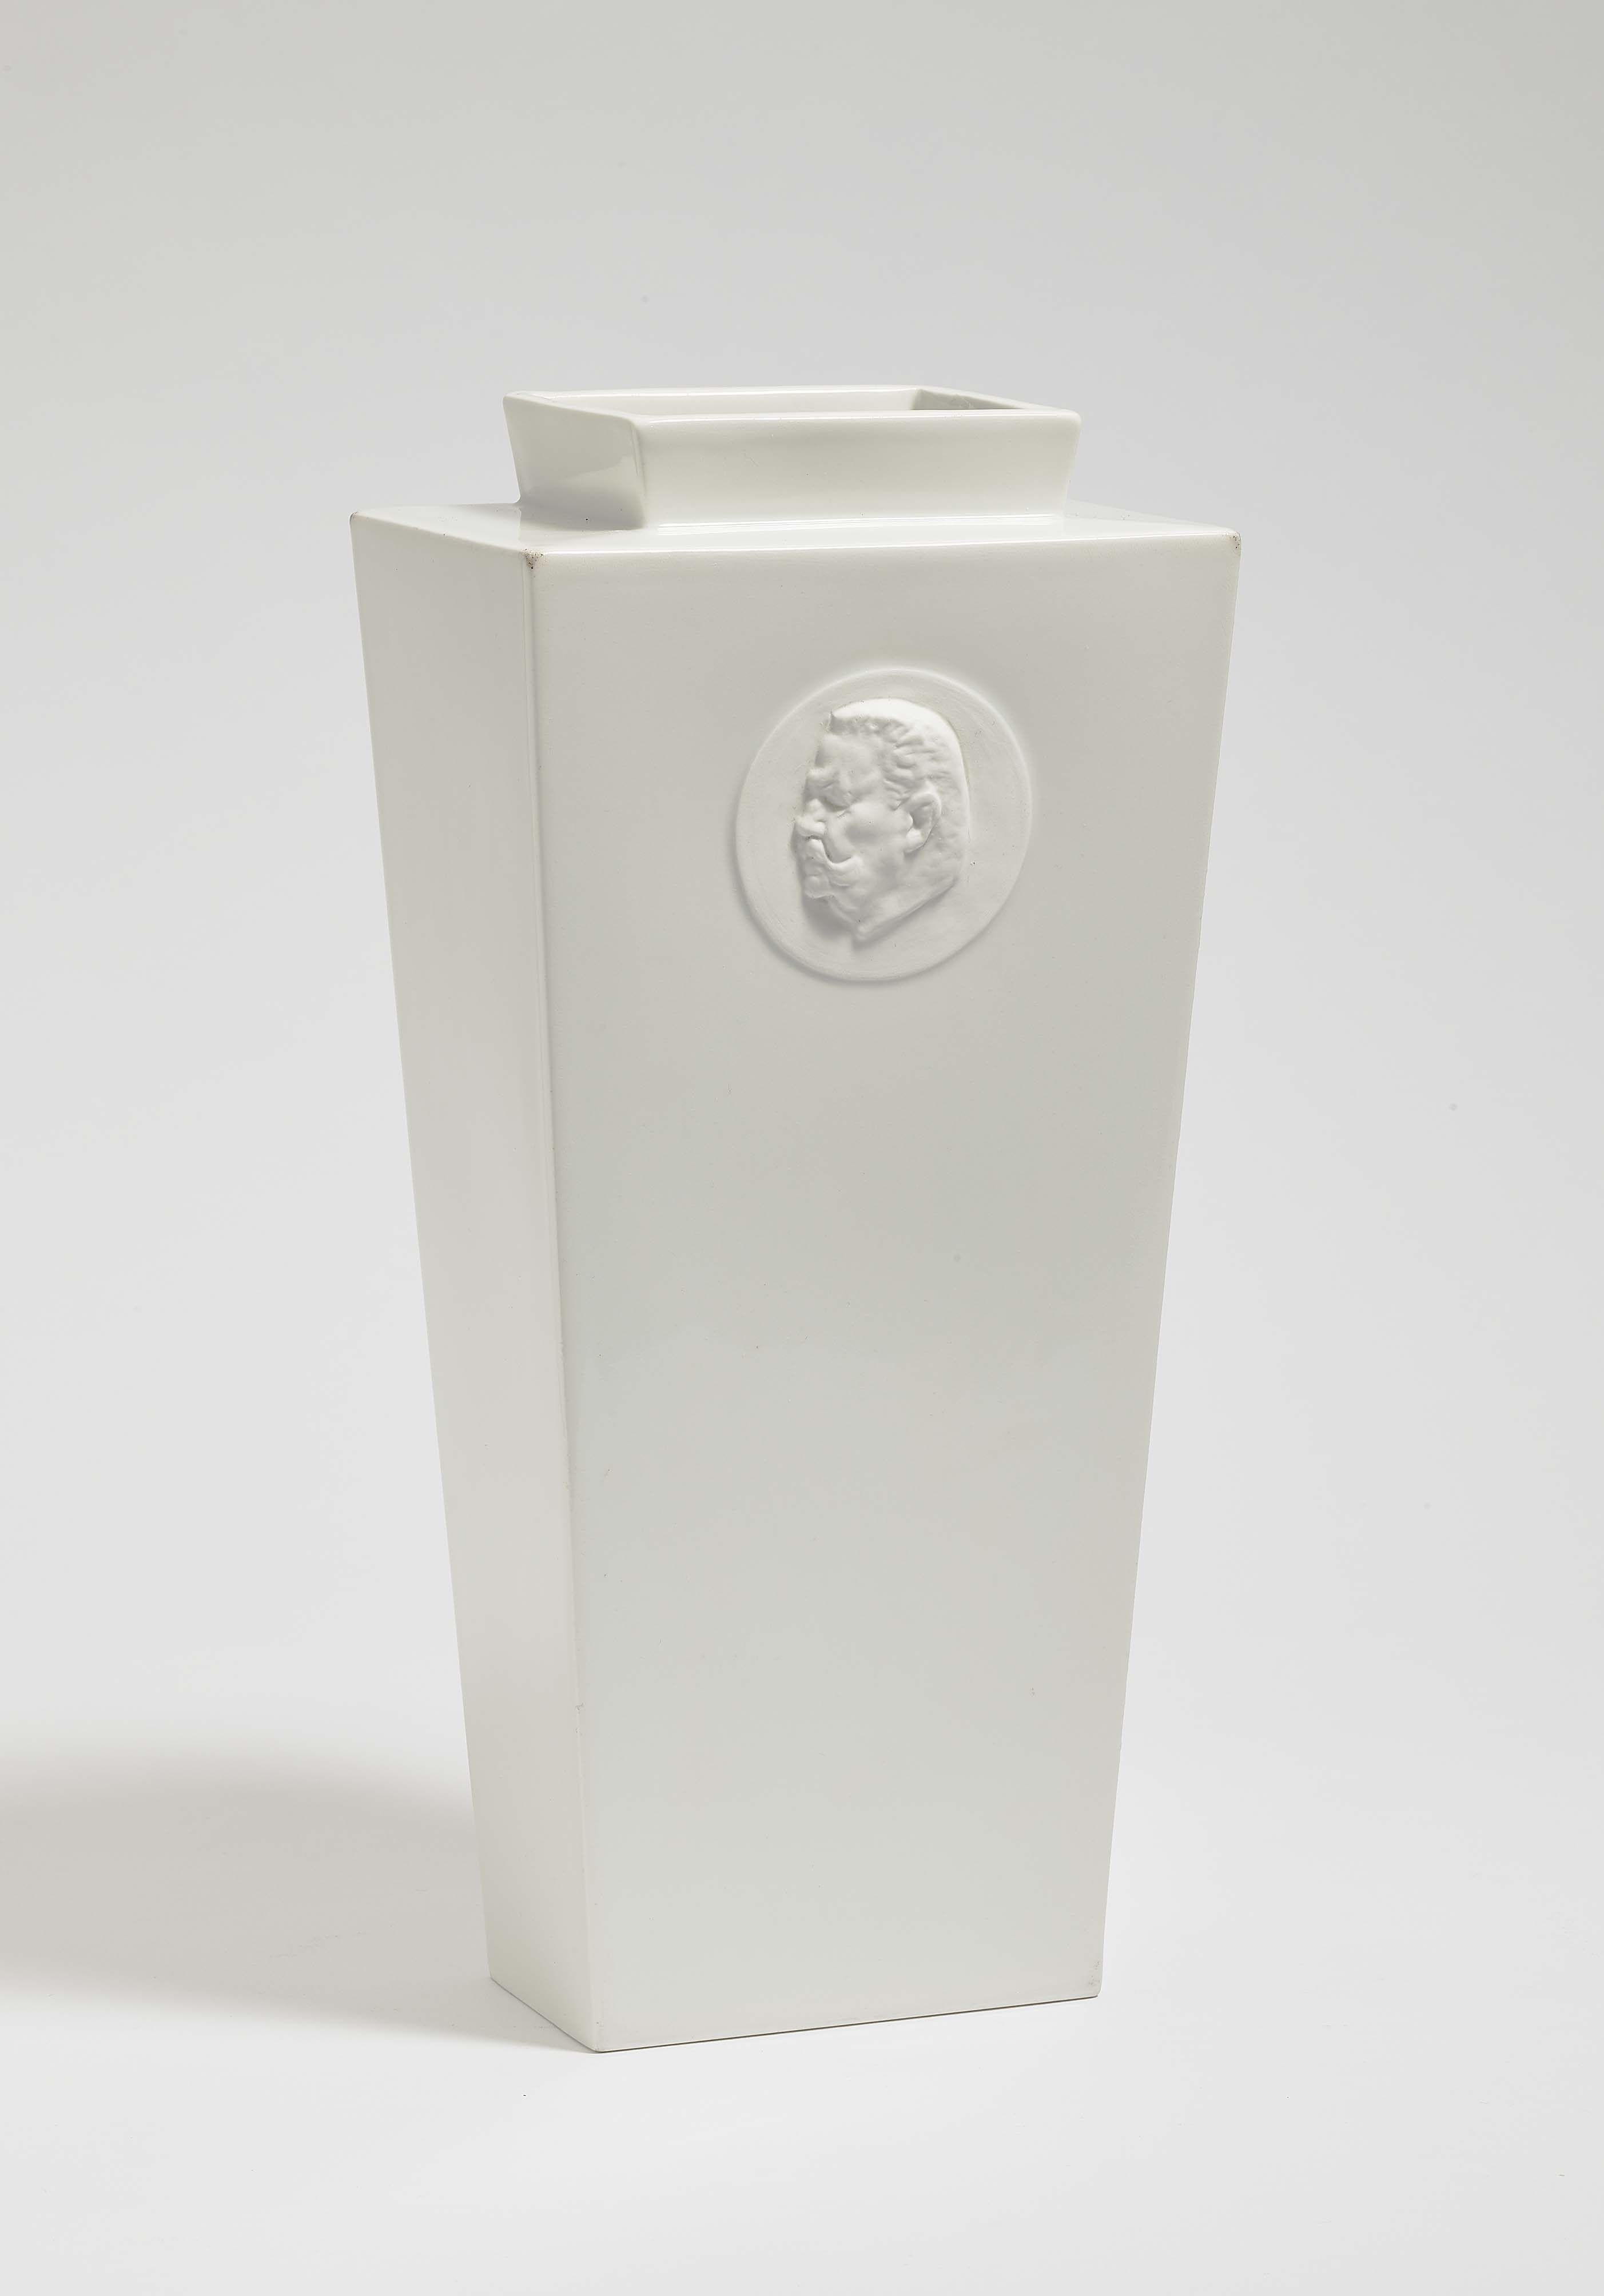 A vaseKPM Berlin, 1927 Design by Bruno Paul, Hindenburg relief by Edwin Scharf Porcelain, white.